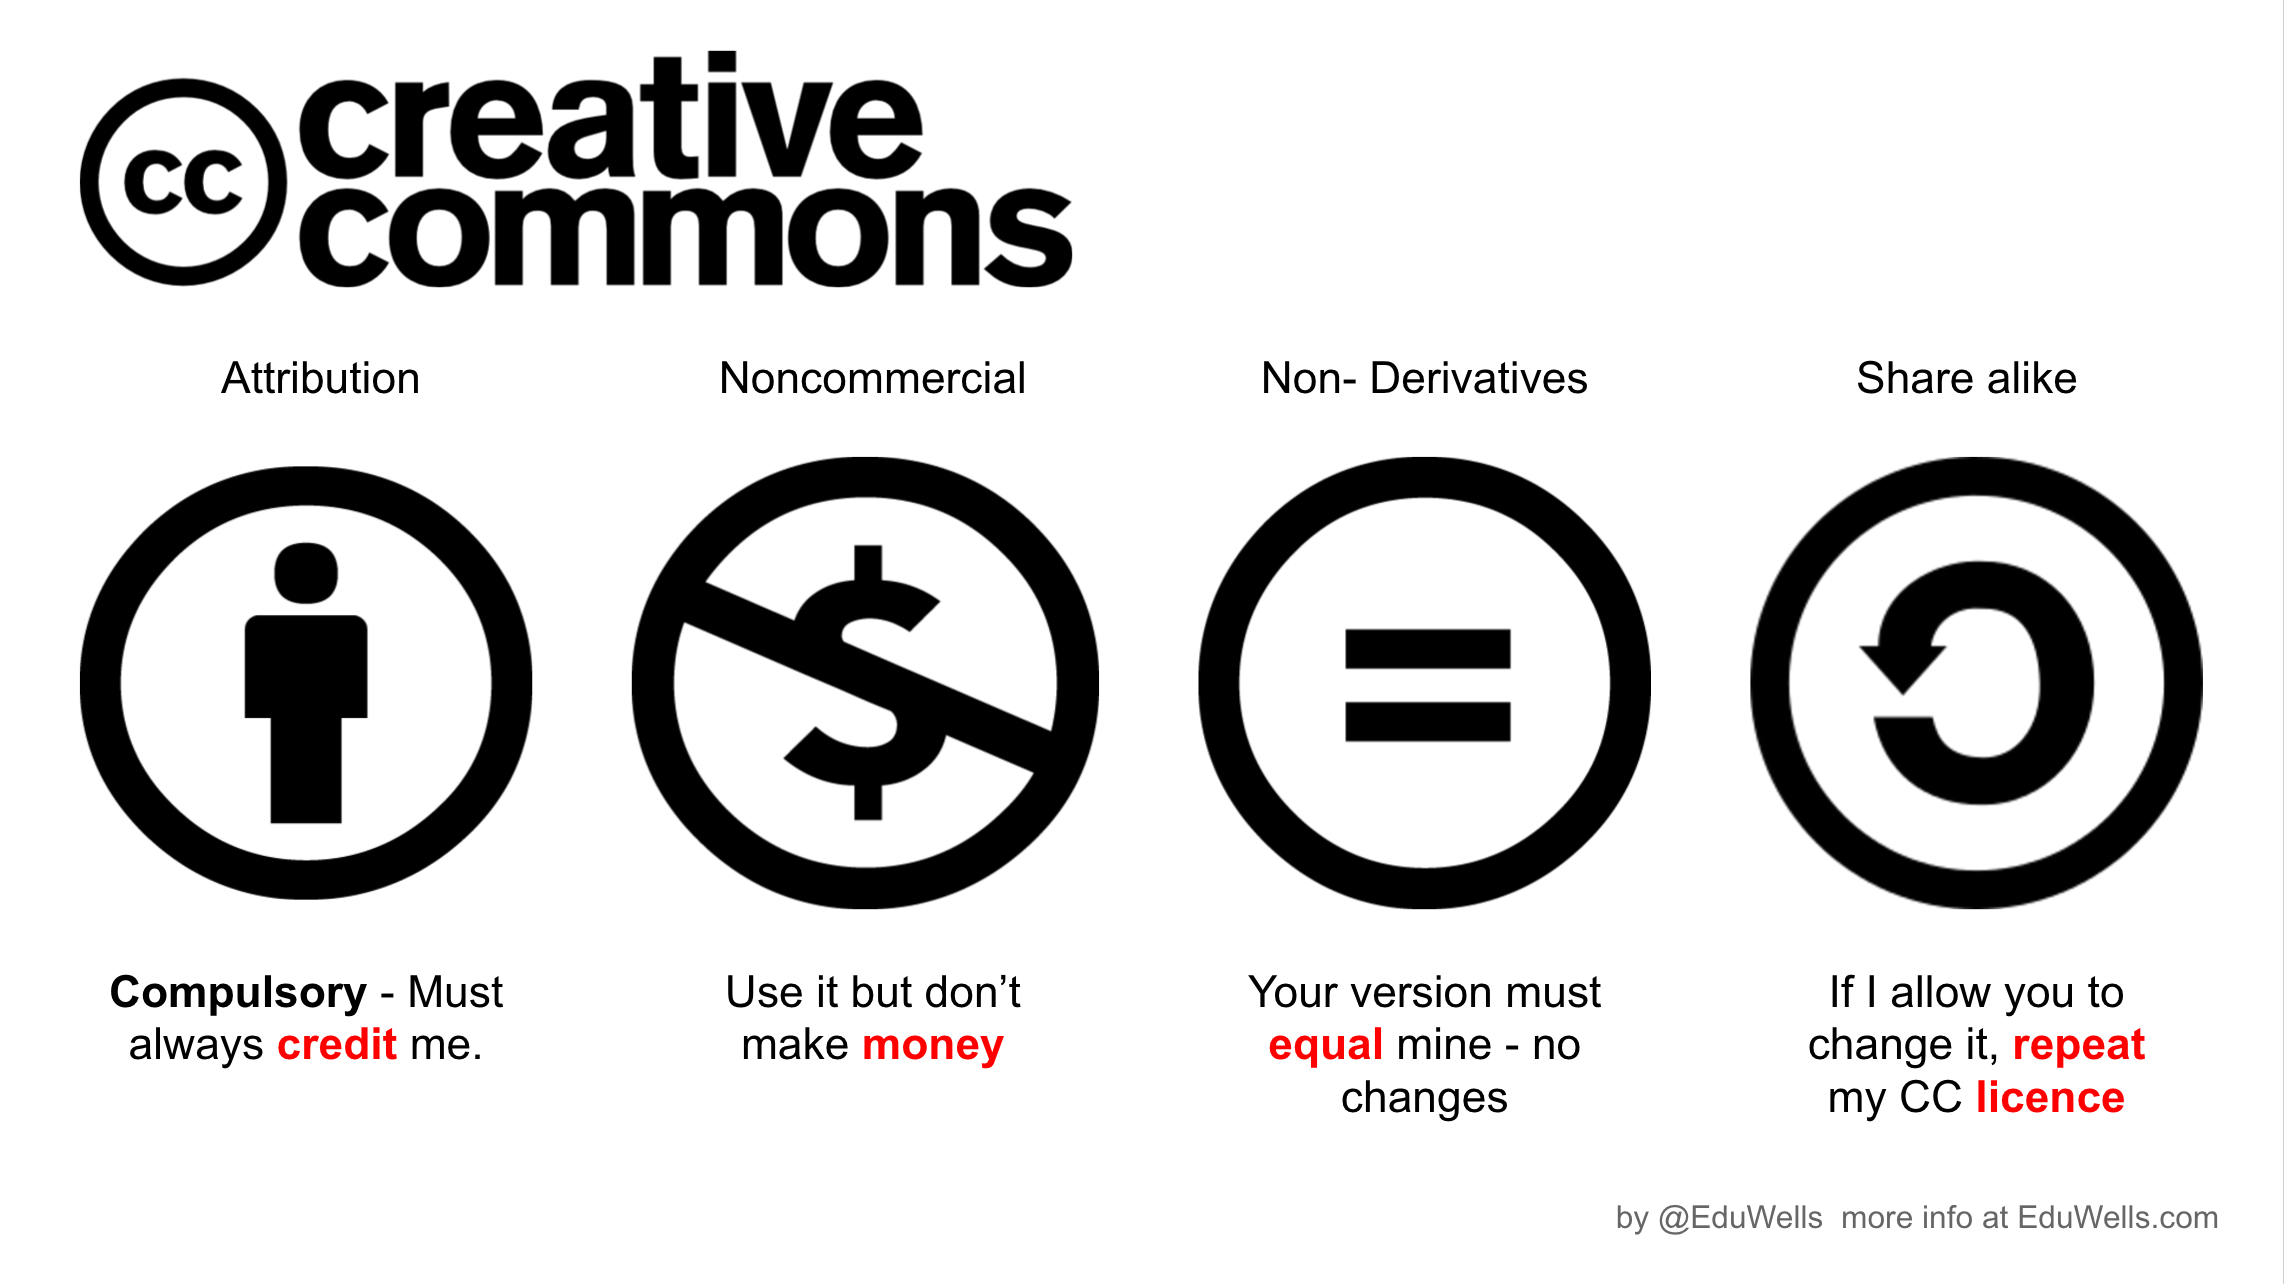 Cc by sa. Creative Commons. Creative Commons значки. Лицензии креатив Коммонс. Creative Commons Attribution.